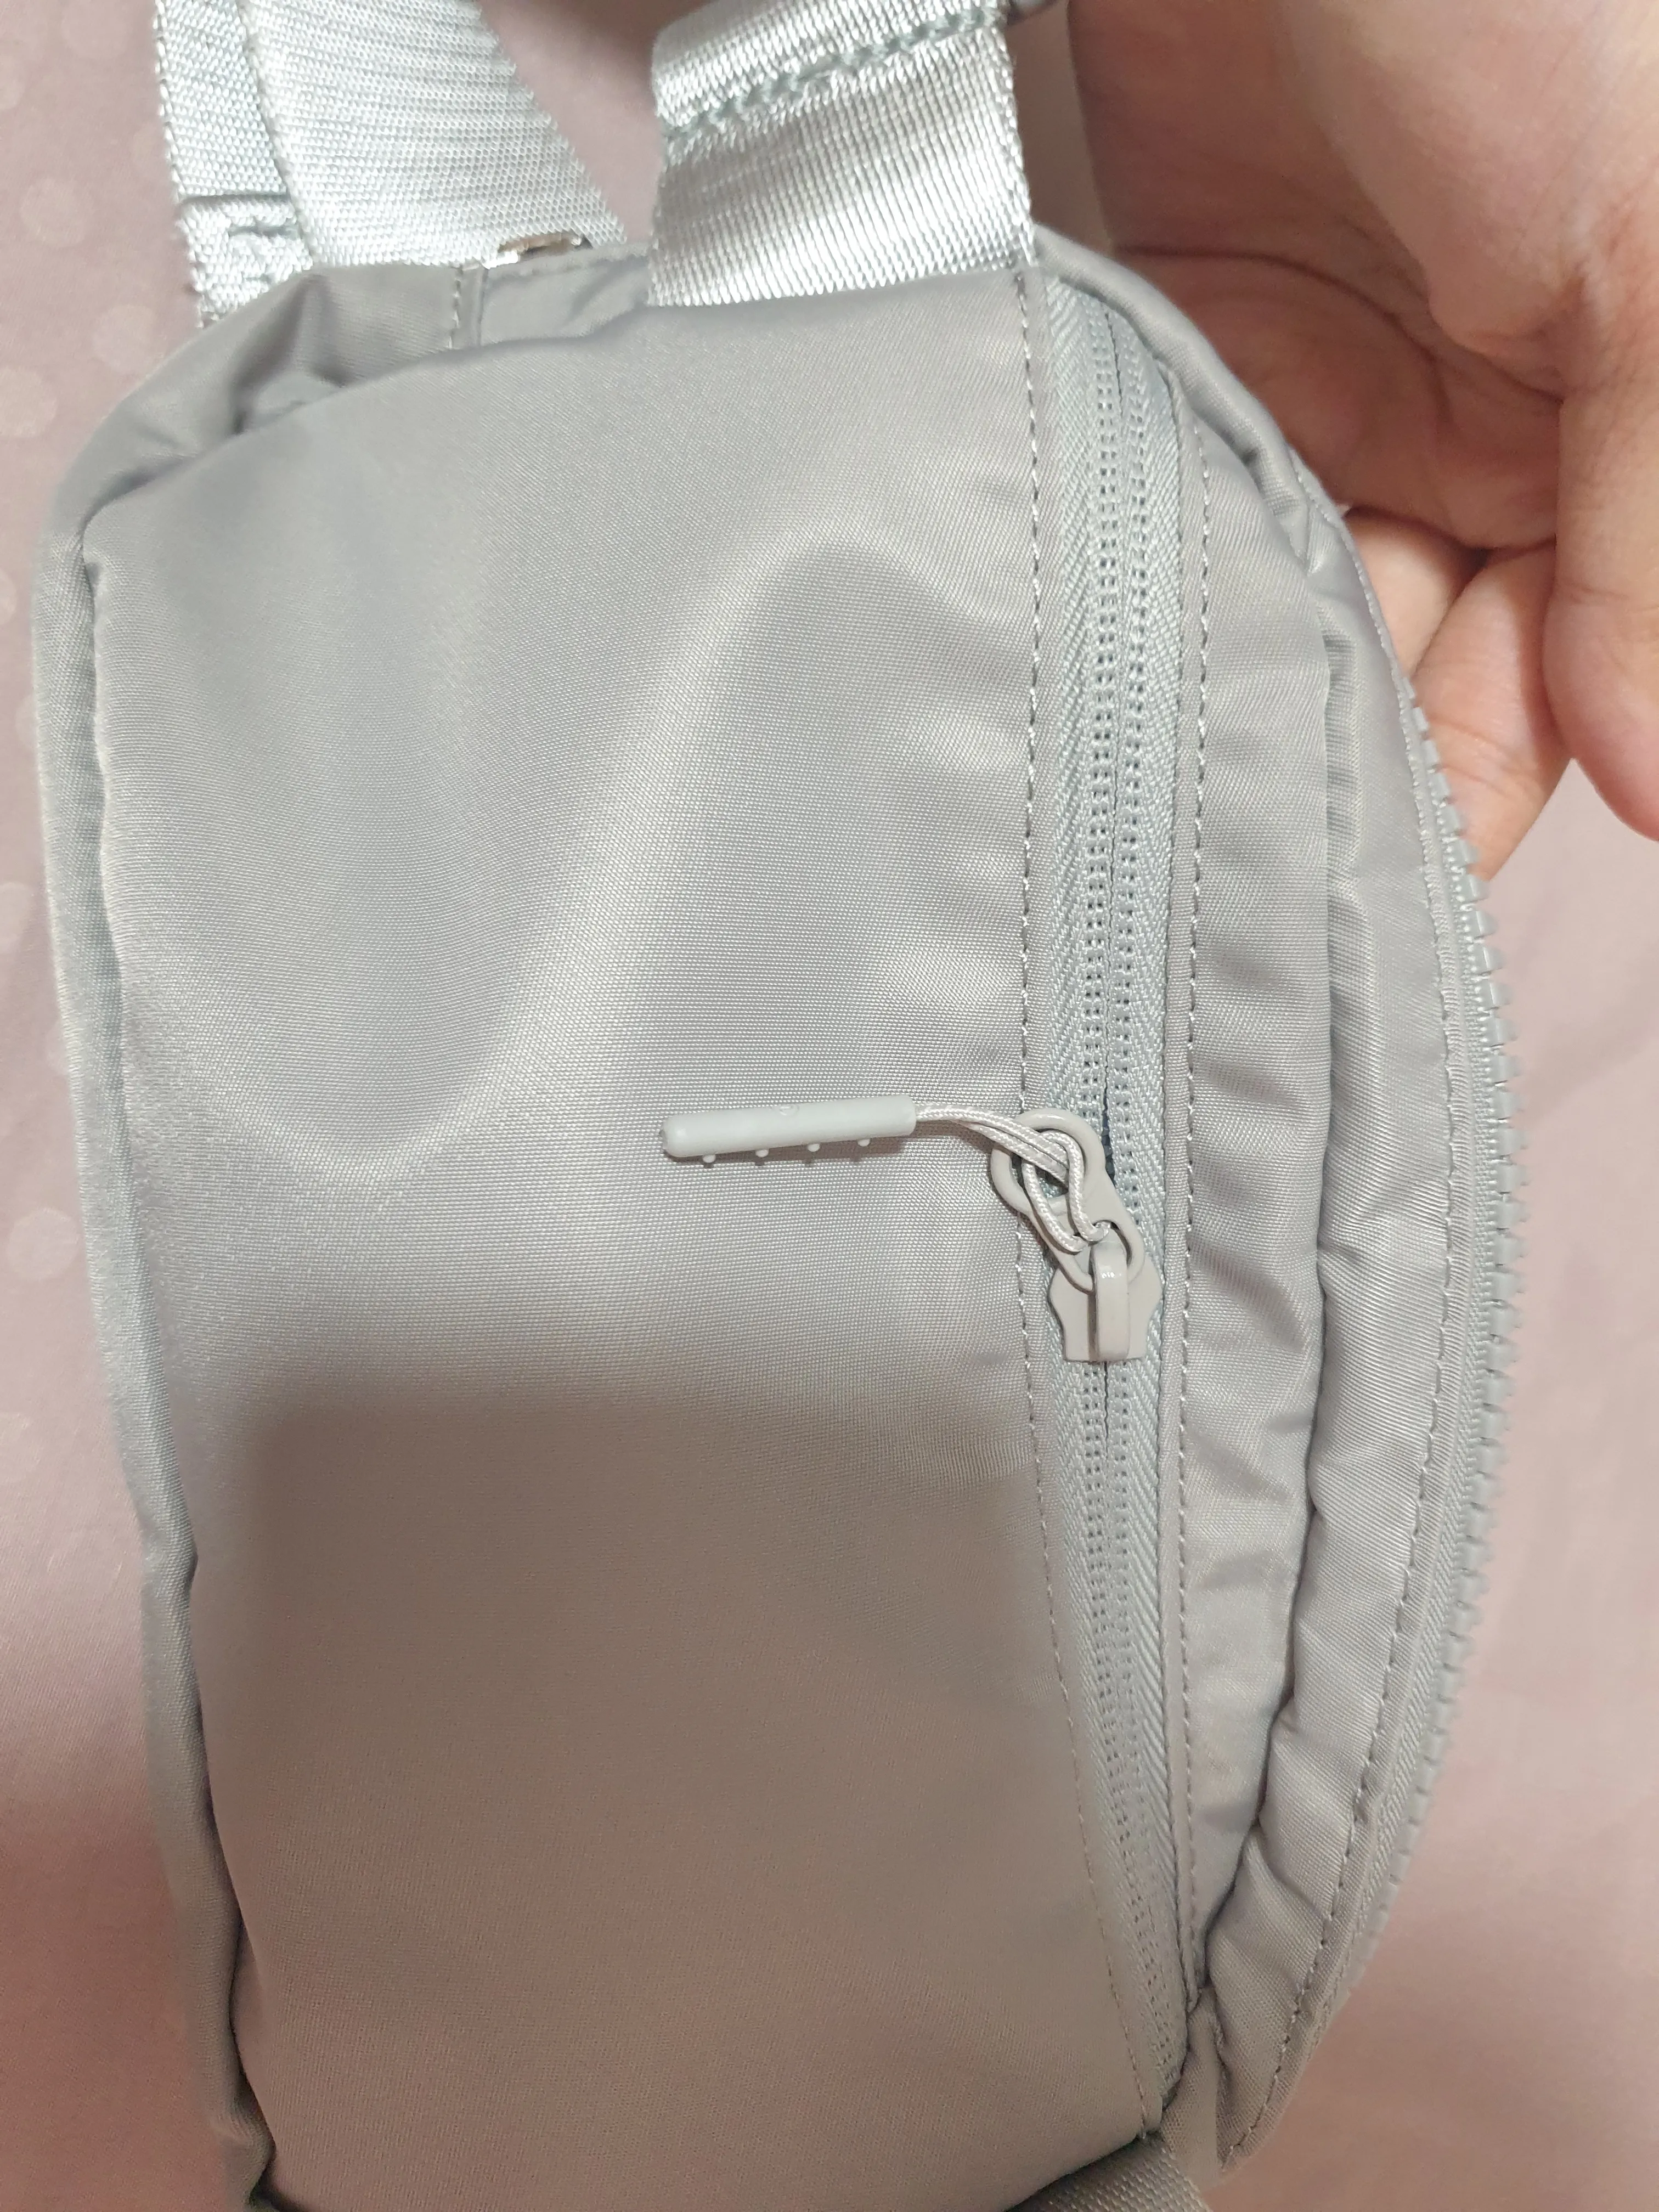 Lululemon's limited-edition Lunar New Year belt bag is selling fast — shop  it for under $55